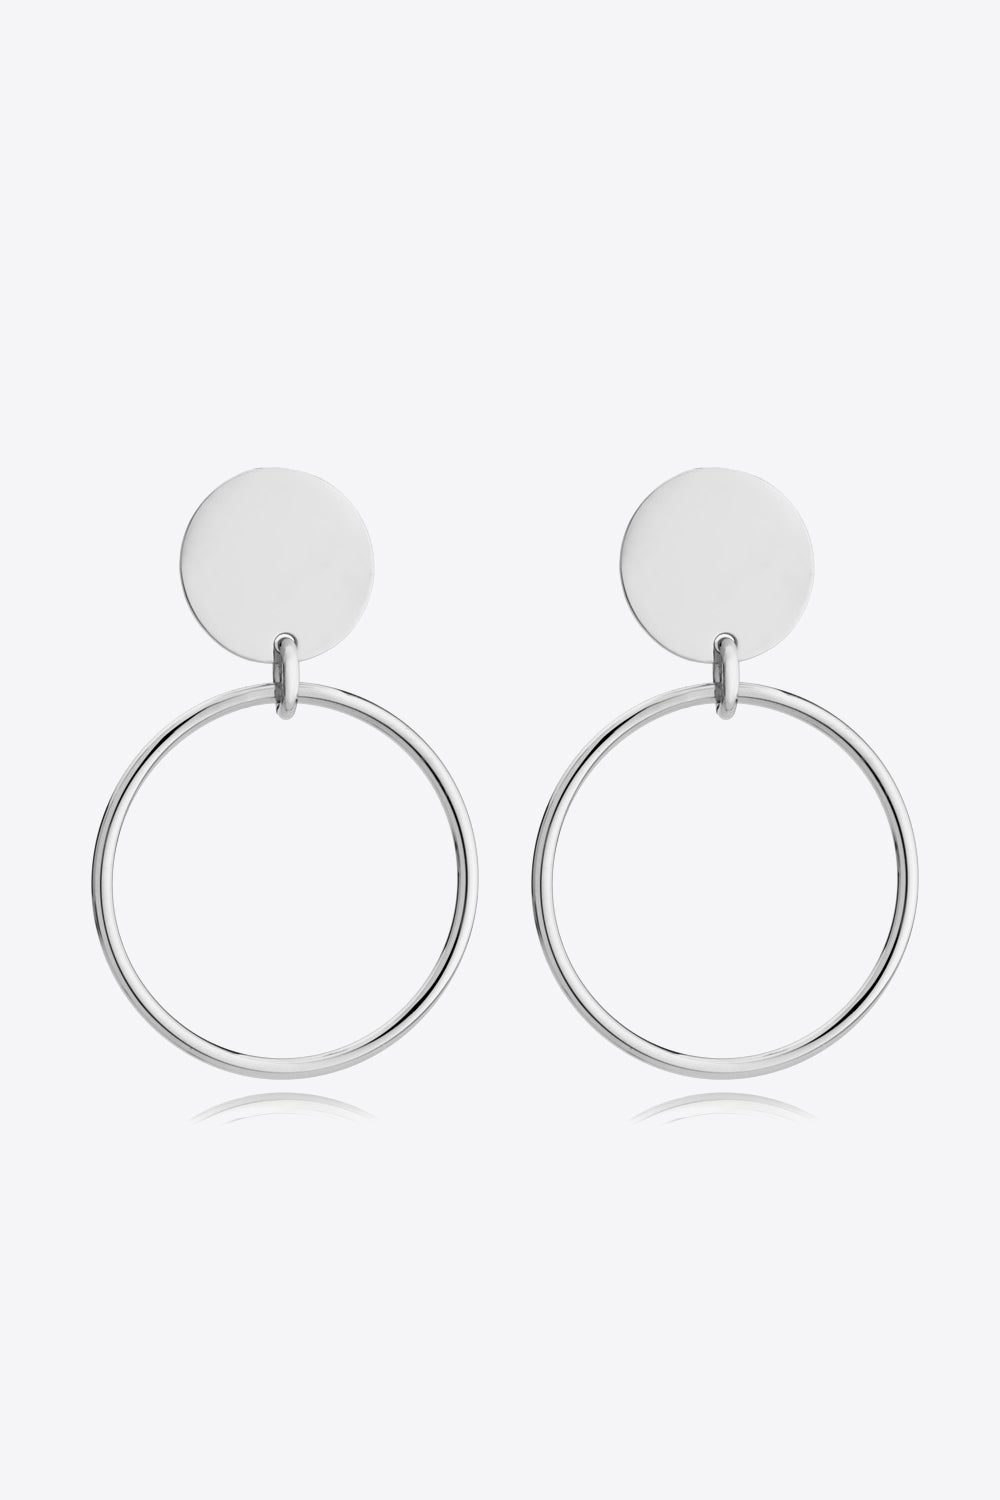 White Smoke Gold-Plated Stainless Steel Drop Earrings Sentient Beauty Fashions earrings